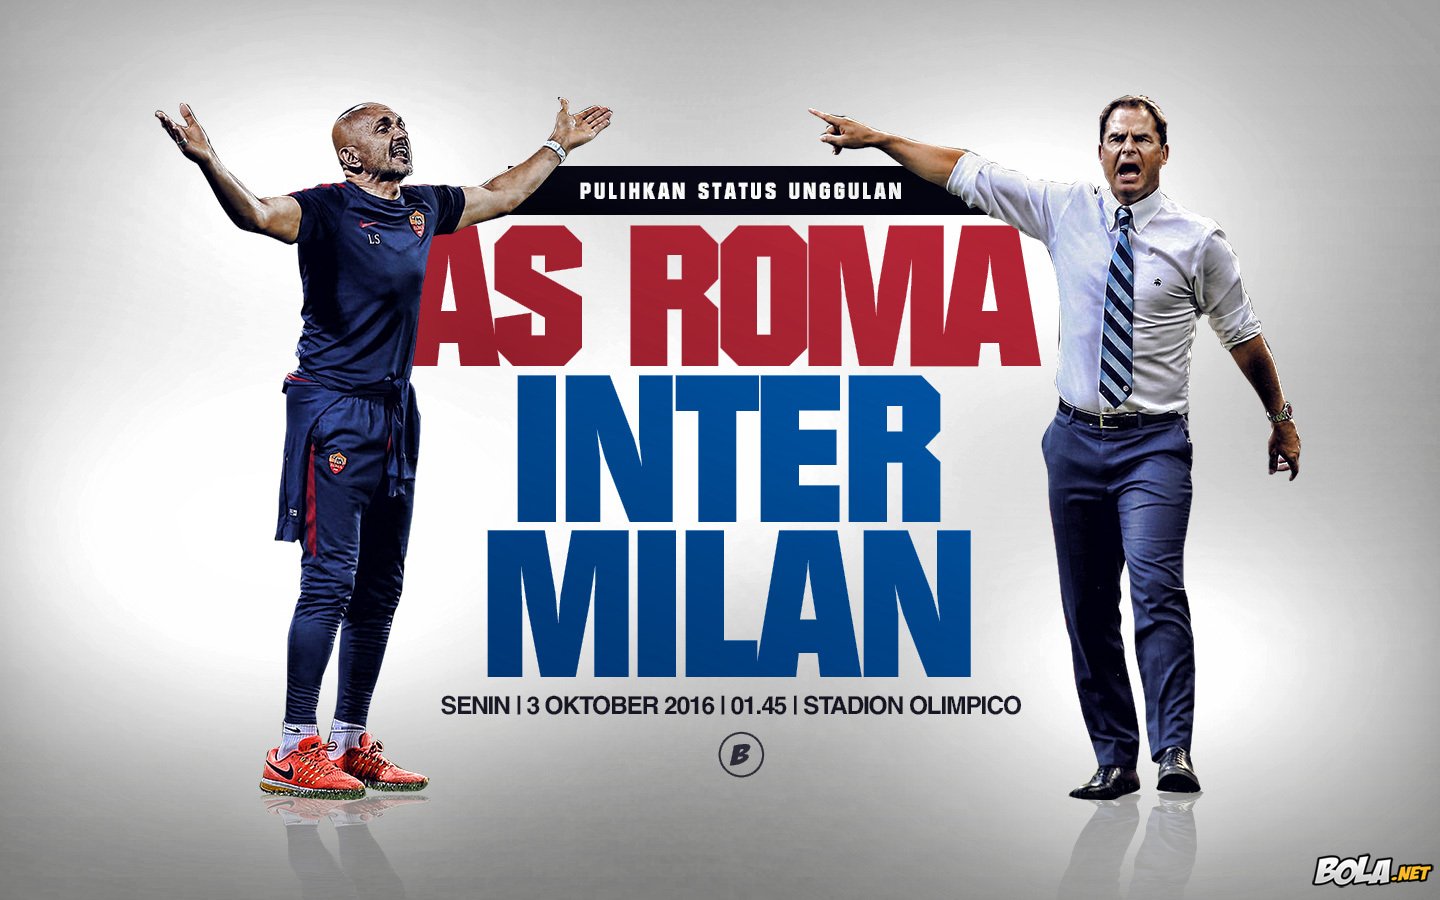 Deskripsi : Wallpaper As Roma Vs Inter Milan, size: 1440x900